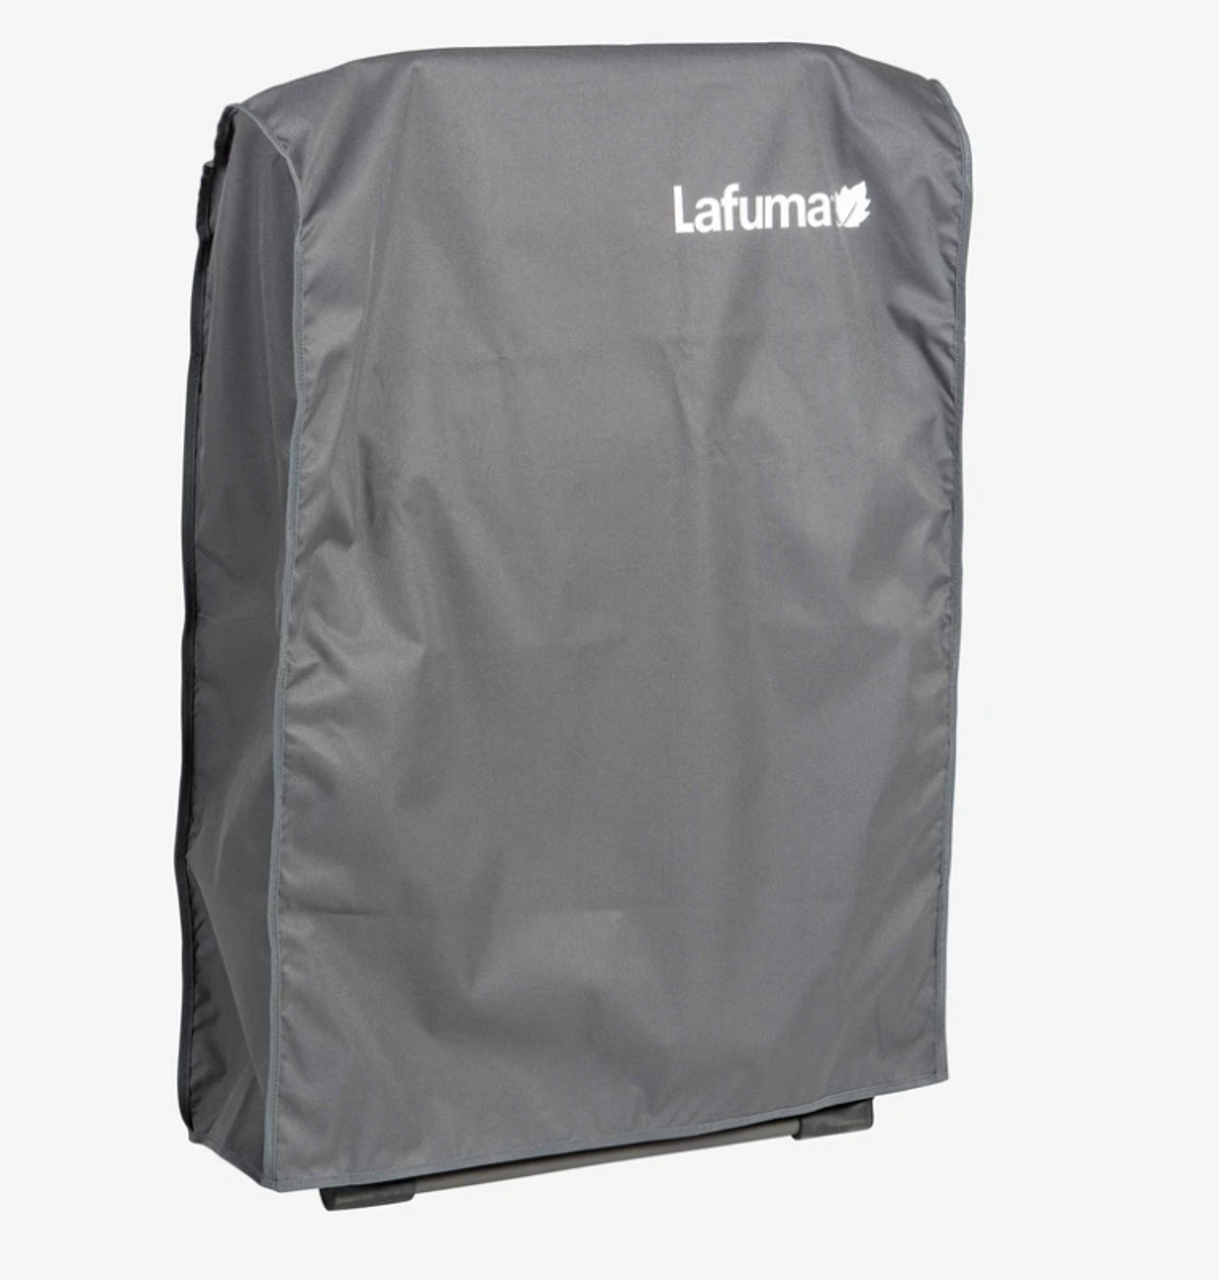 Lafuma Storage Bag - Grey